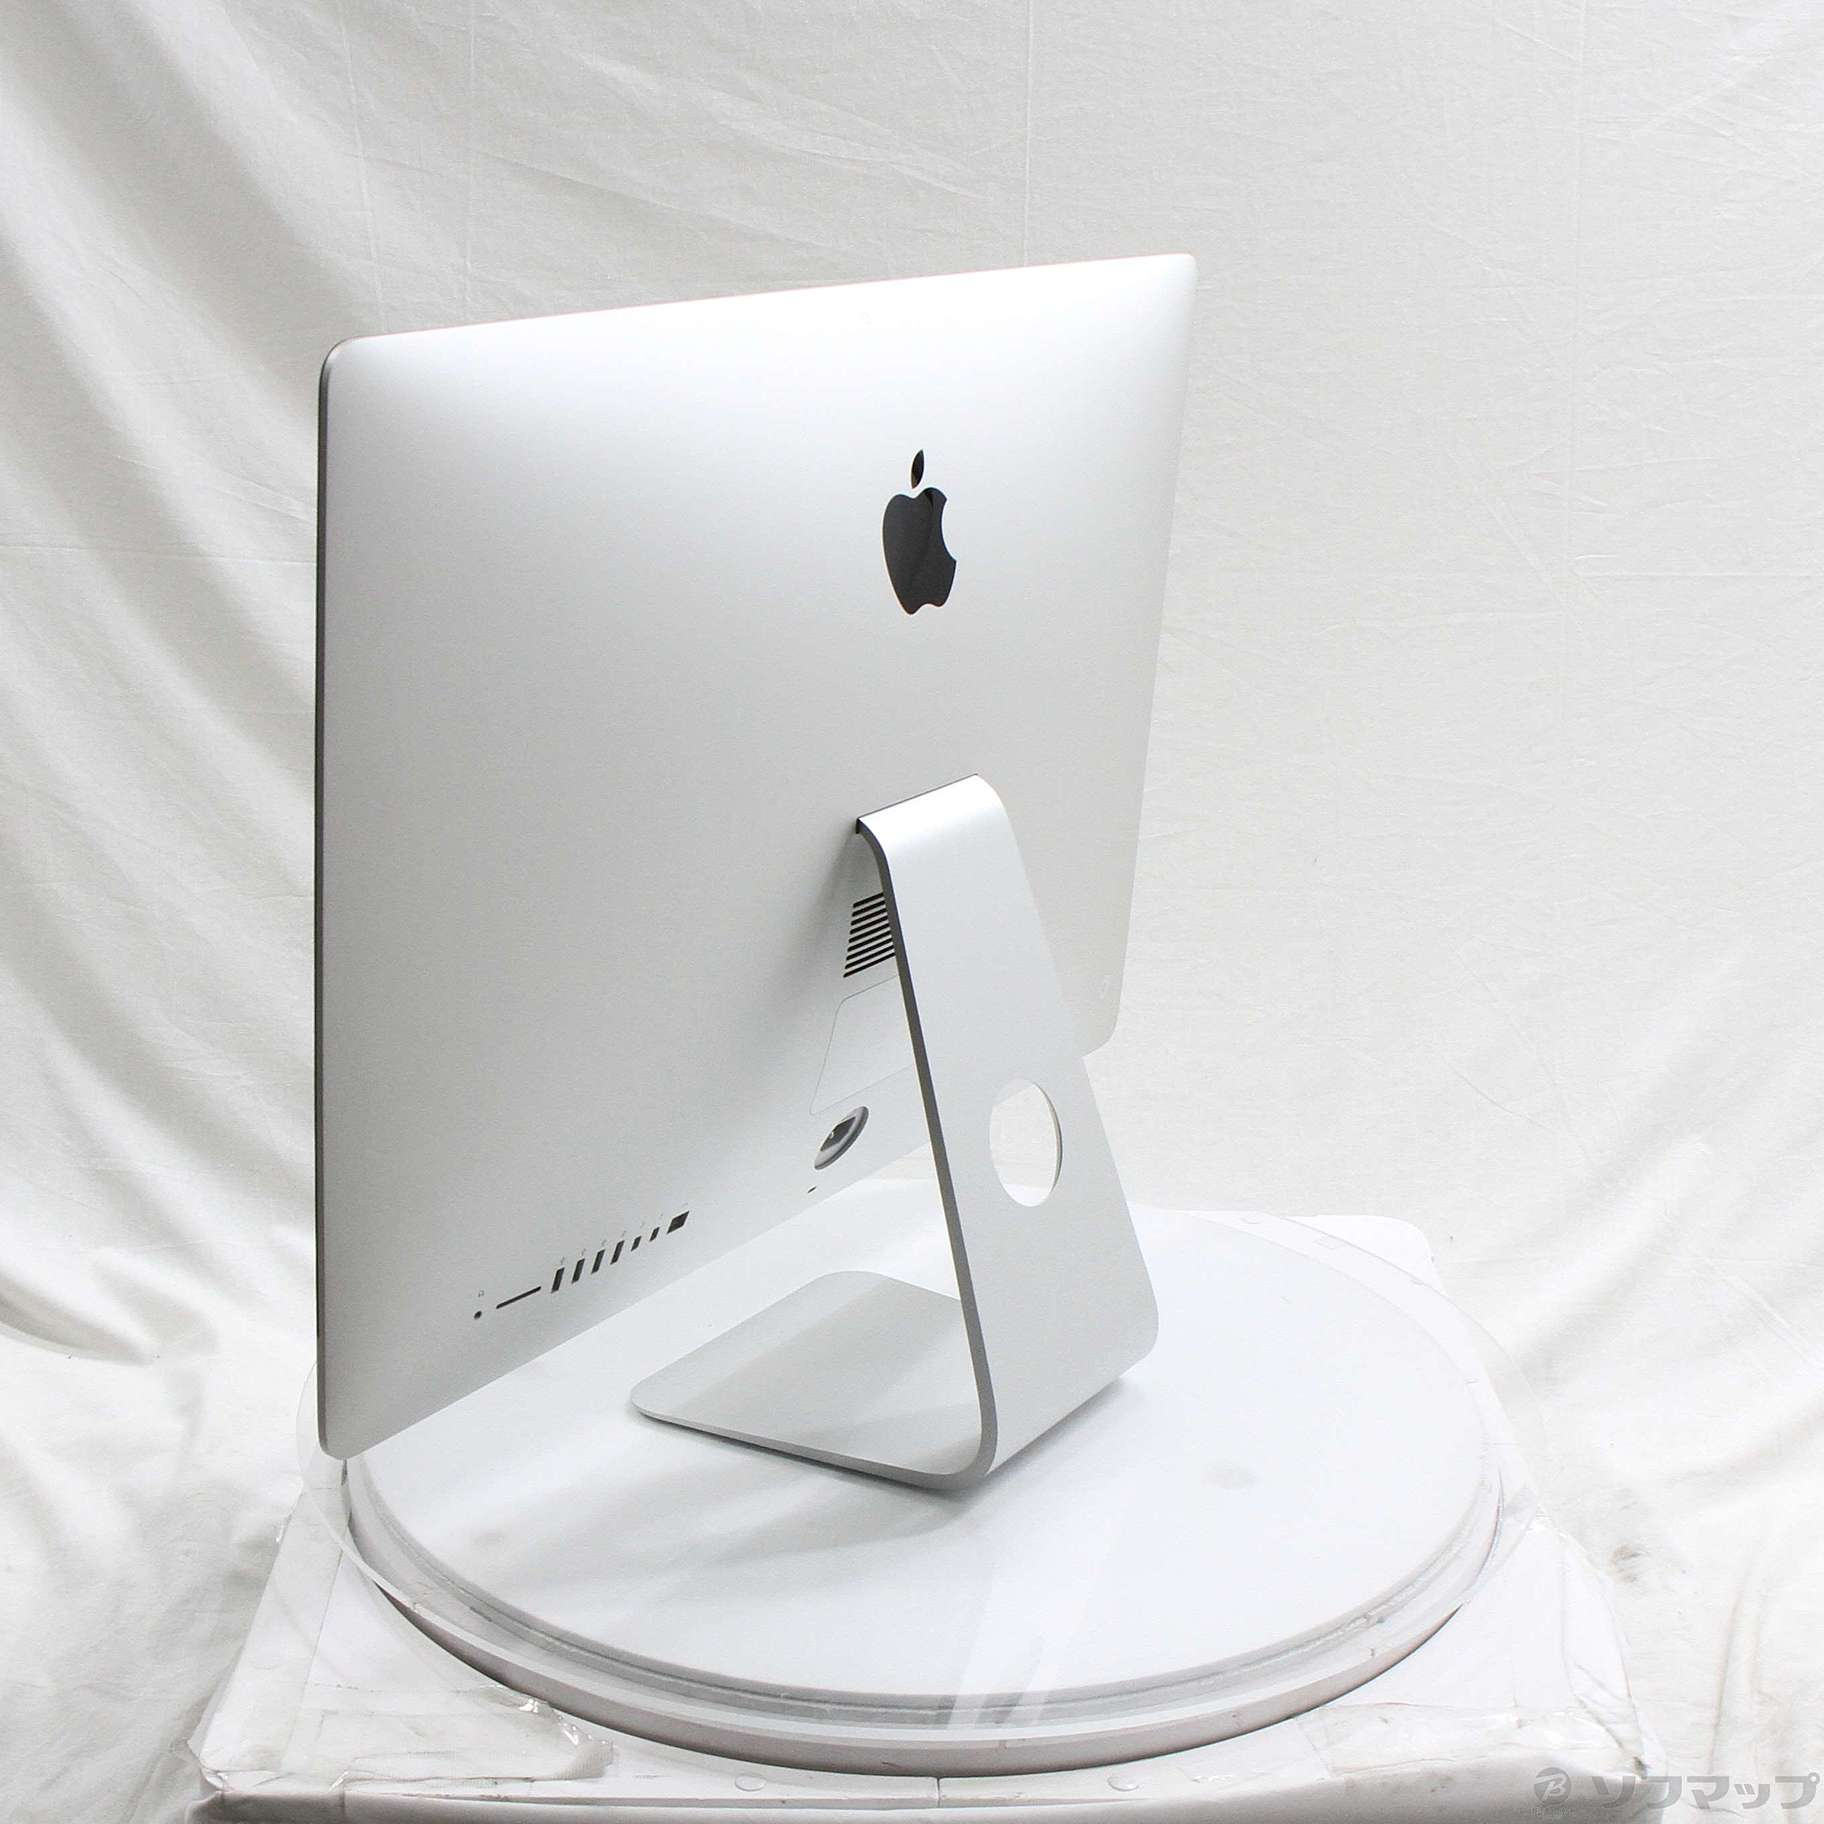 中古品〕 iMac 27-inch Late 2015 MK482J／A Core_i5 3.3GHz 32GB ...